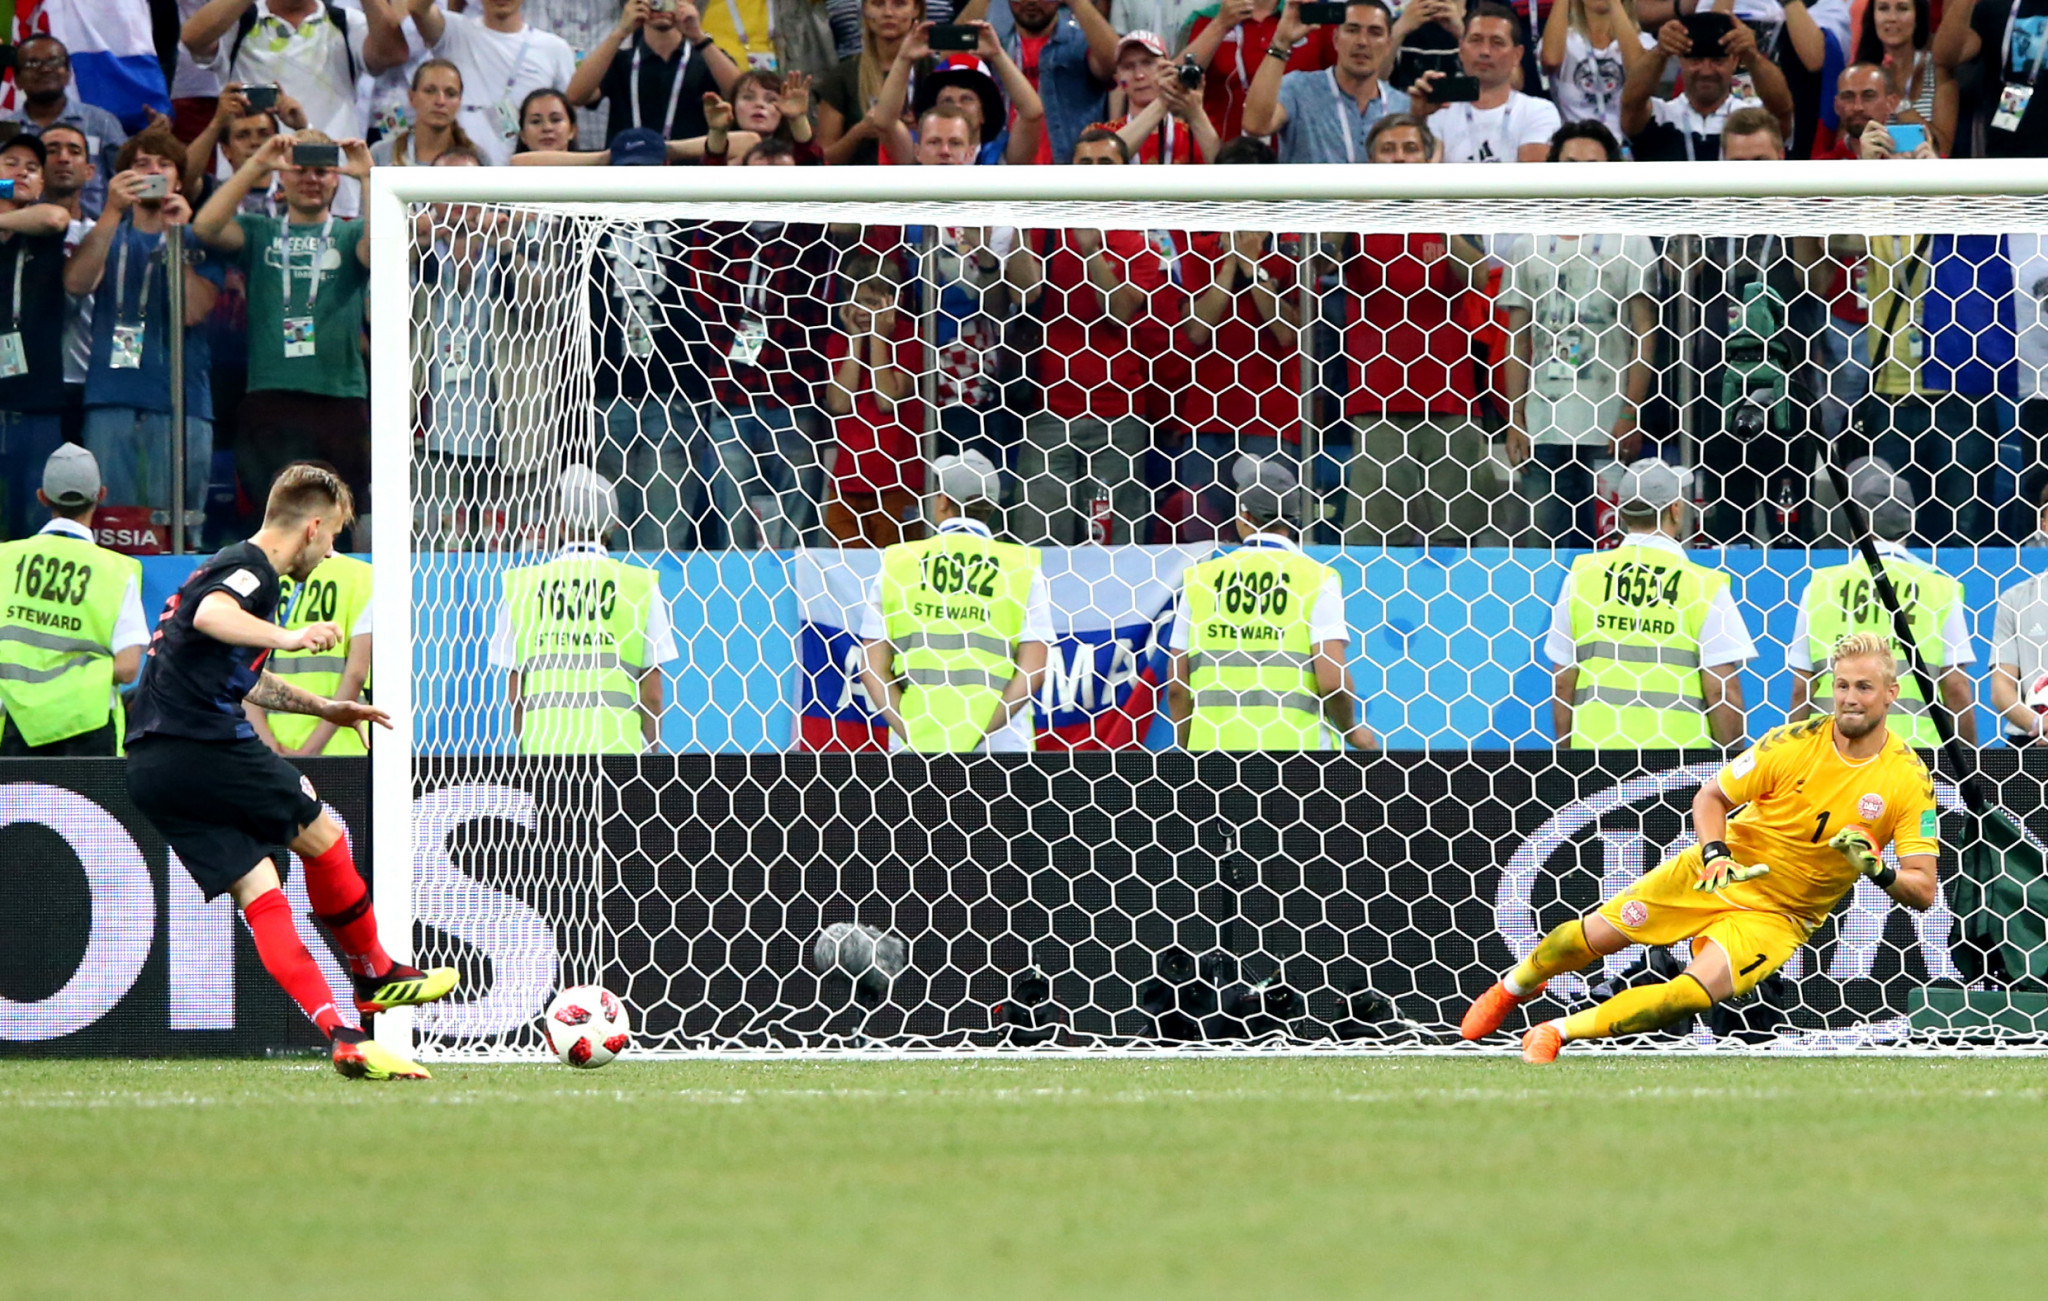 Ivan Rakitic scored the decisive penalty for Croatia ©Getty Images